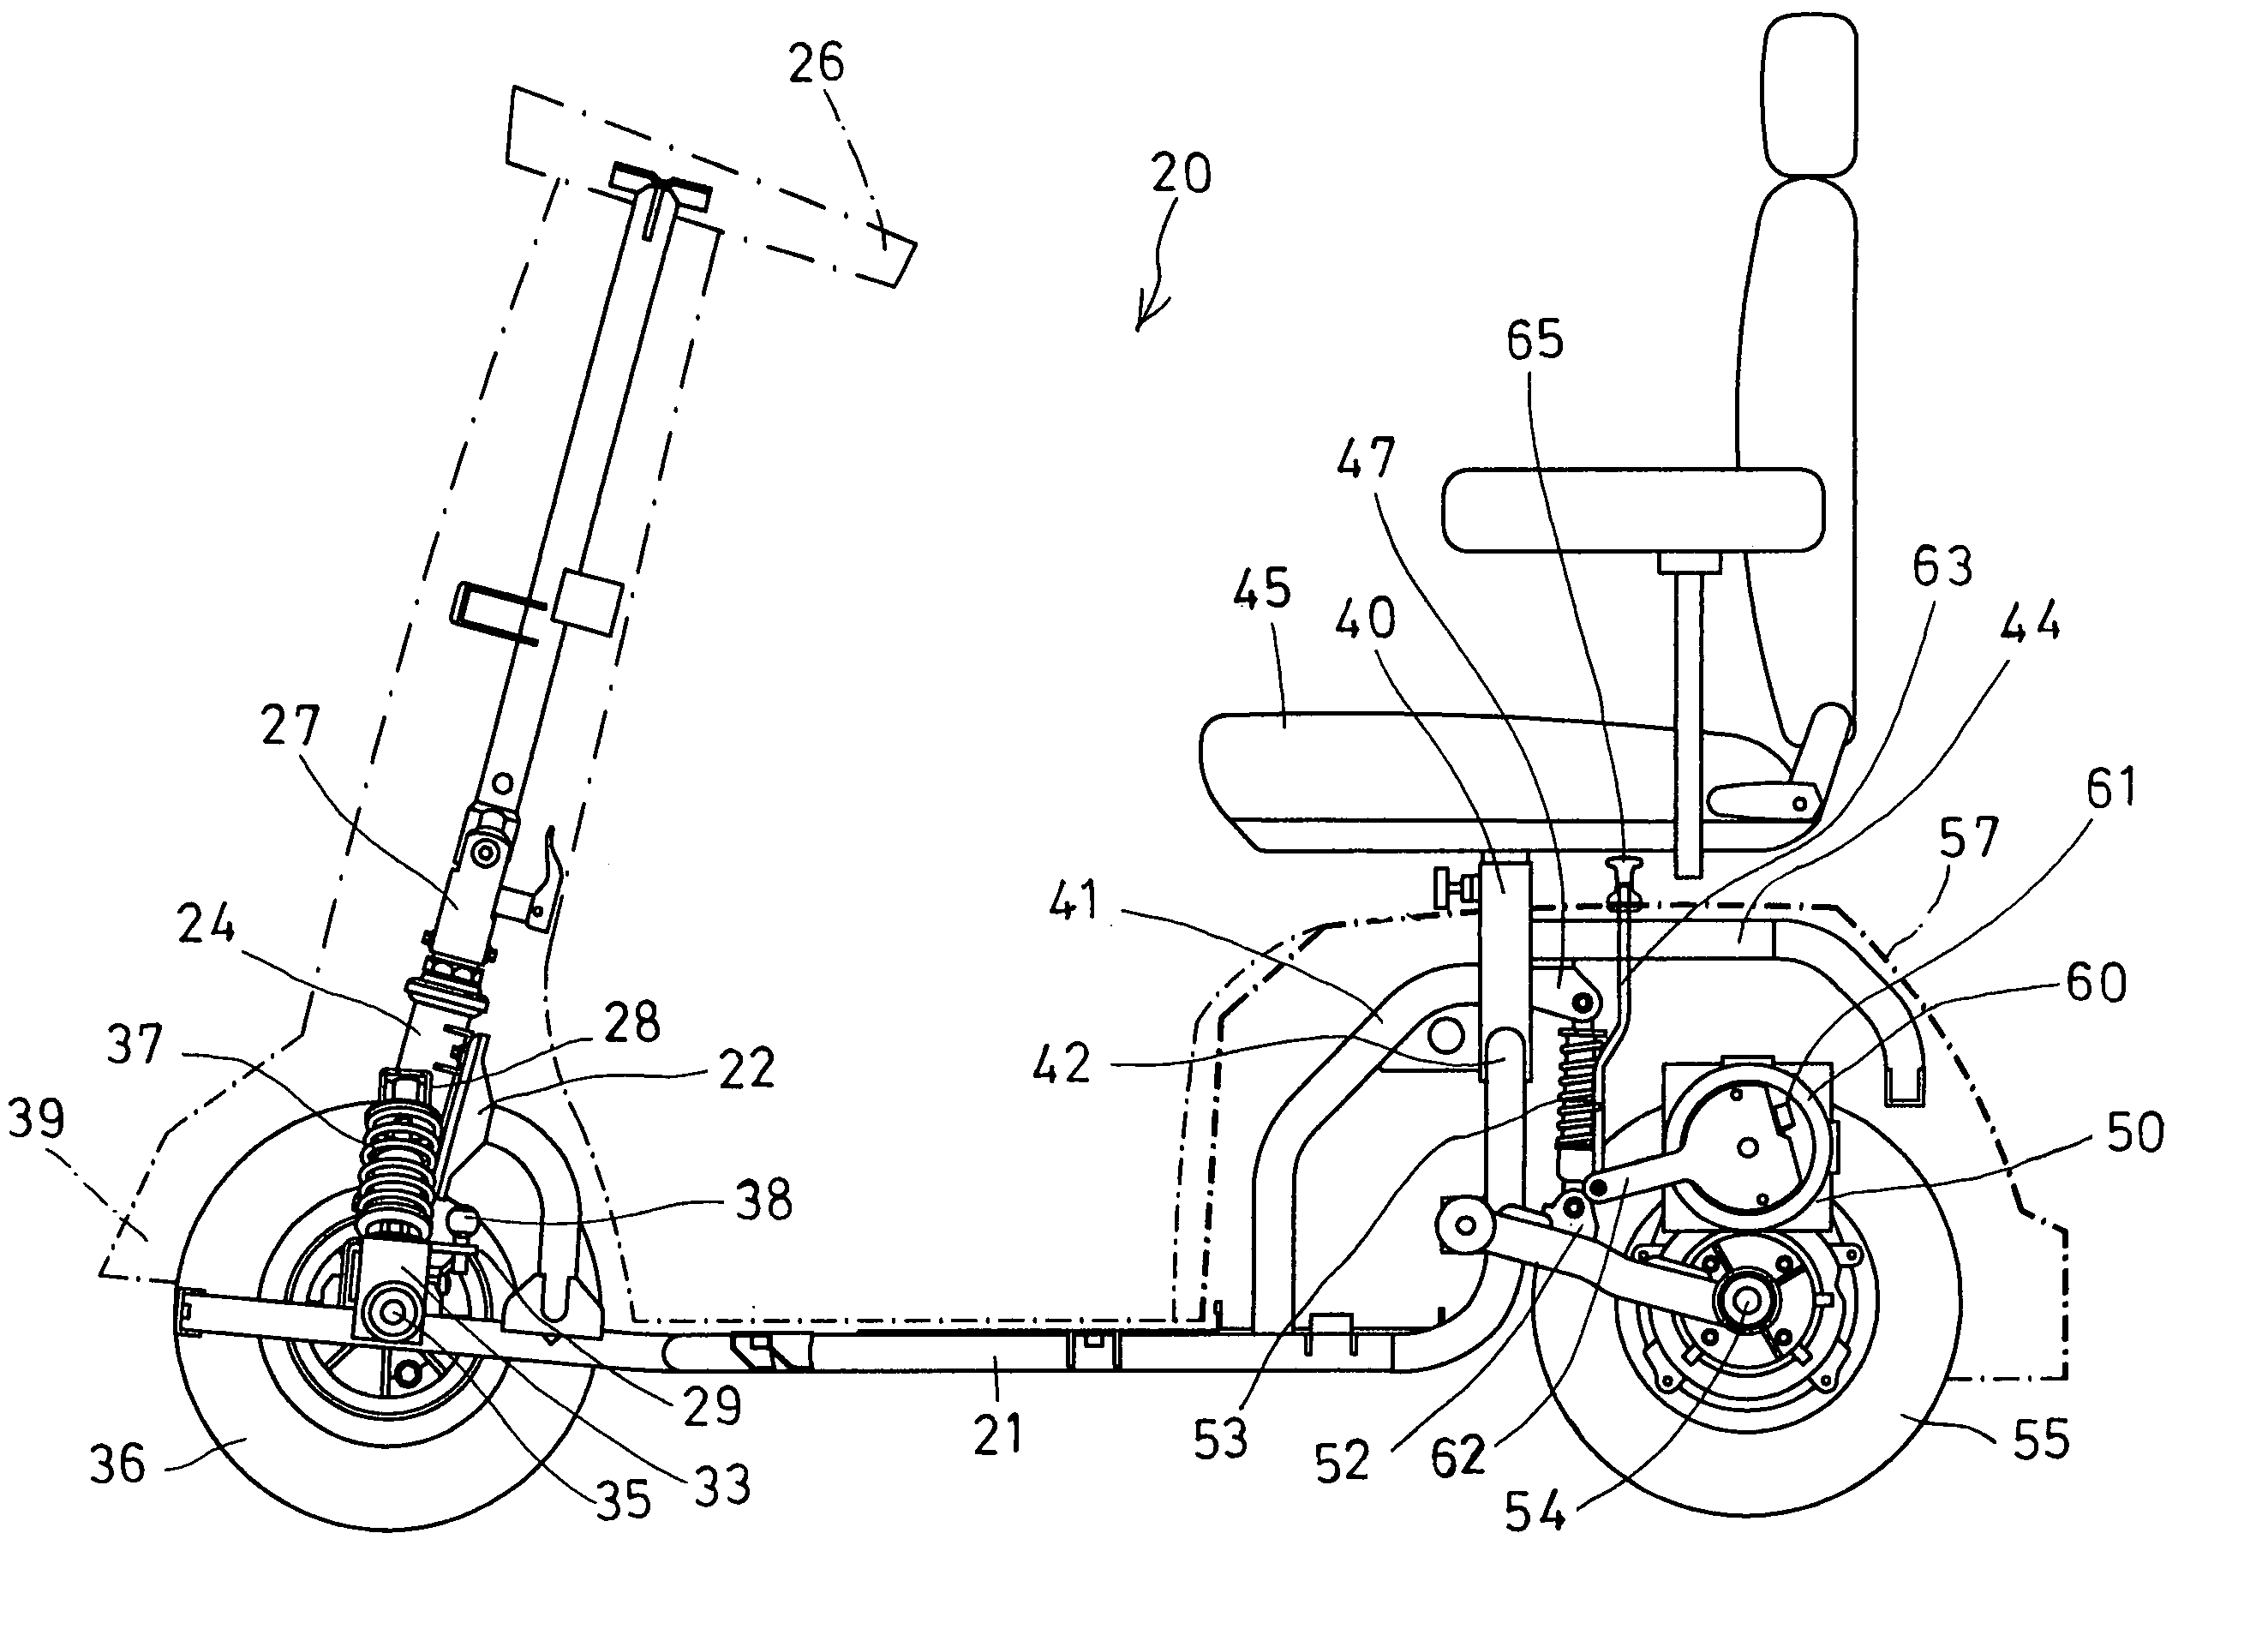 Electric motor having suspension mechanism